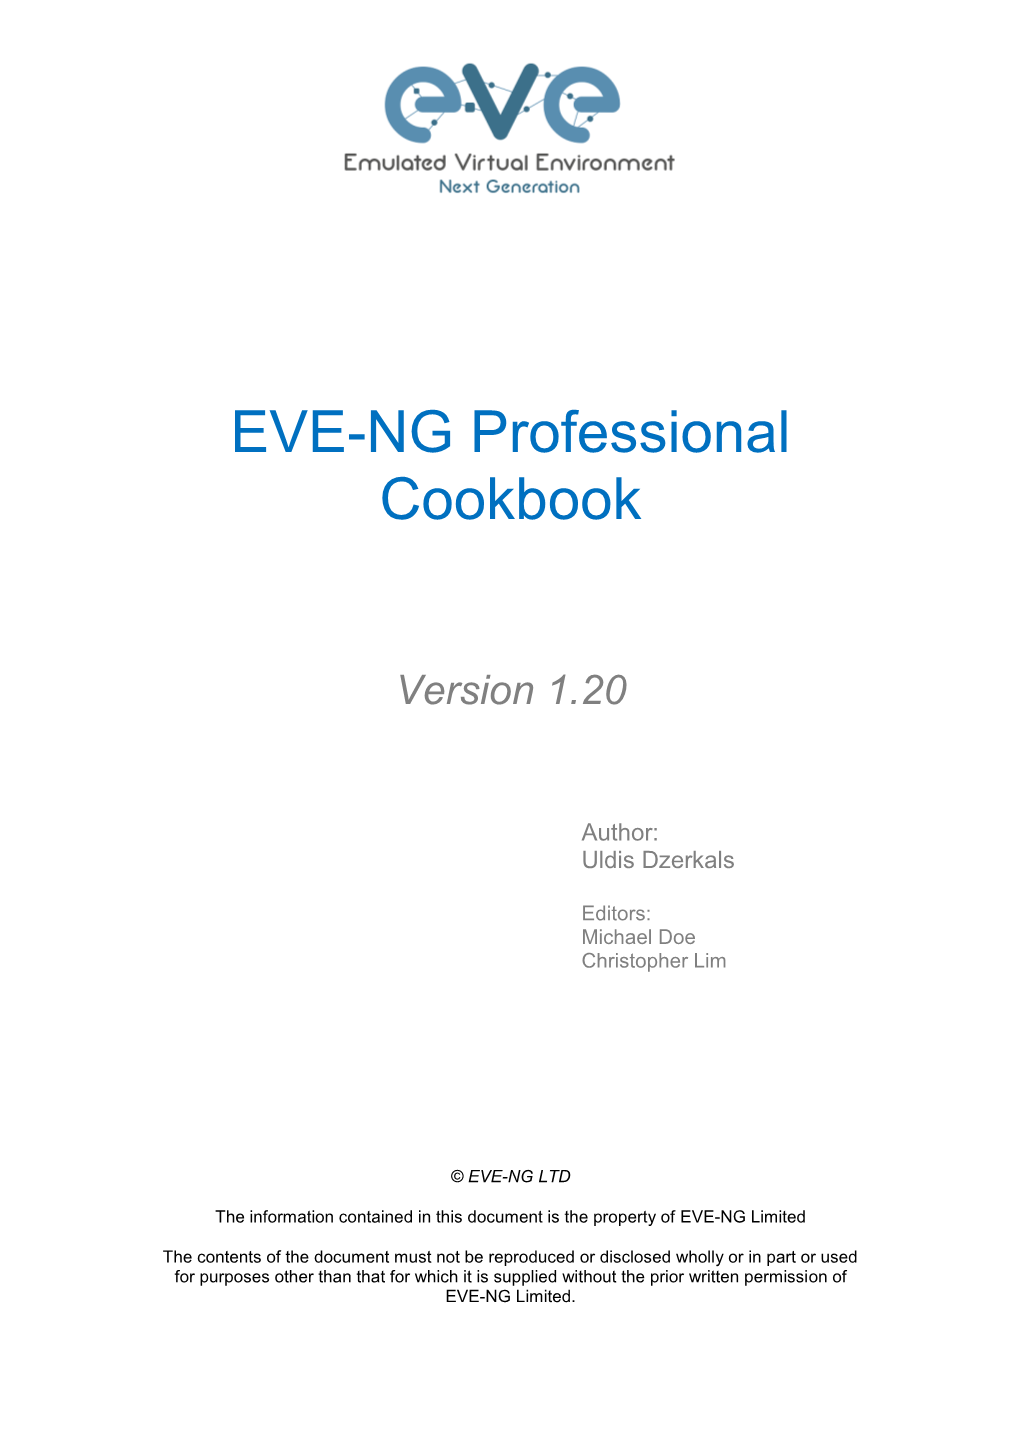 EVE-NG Professional Cookbook